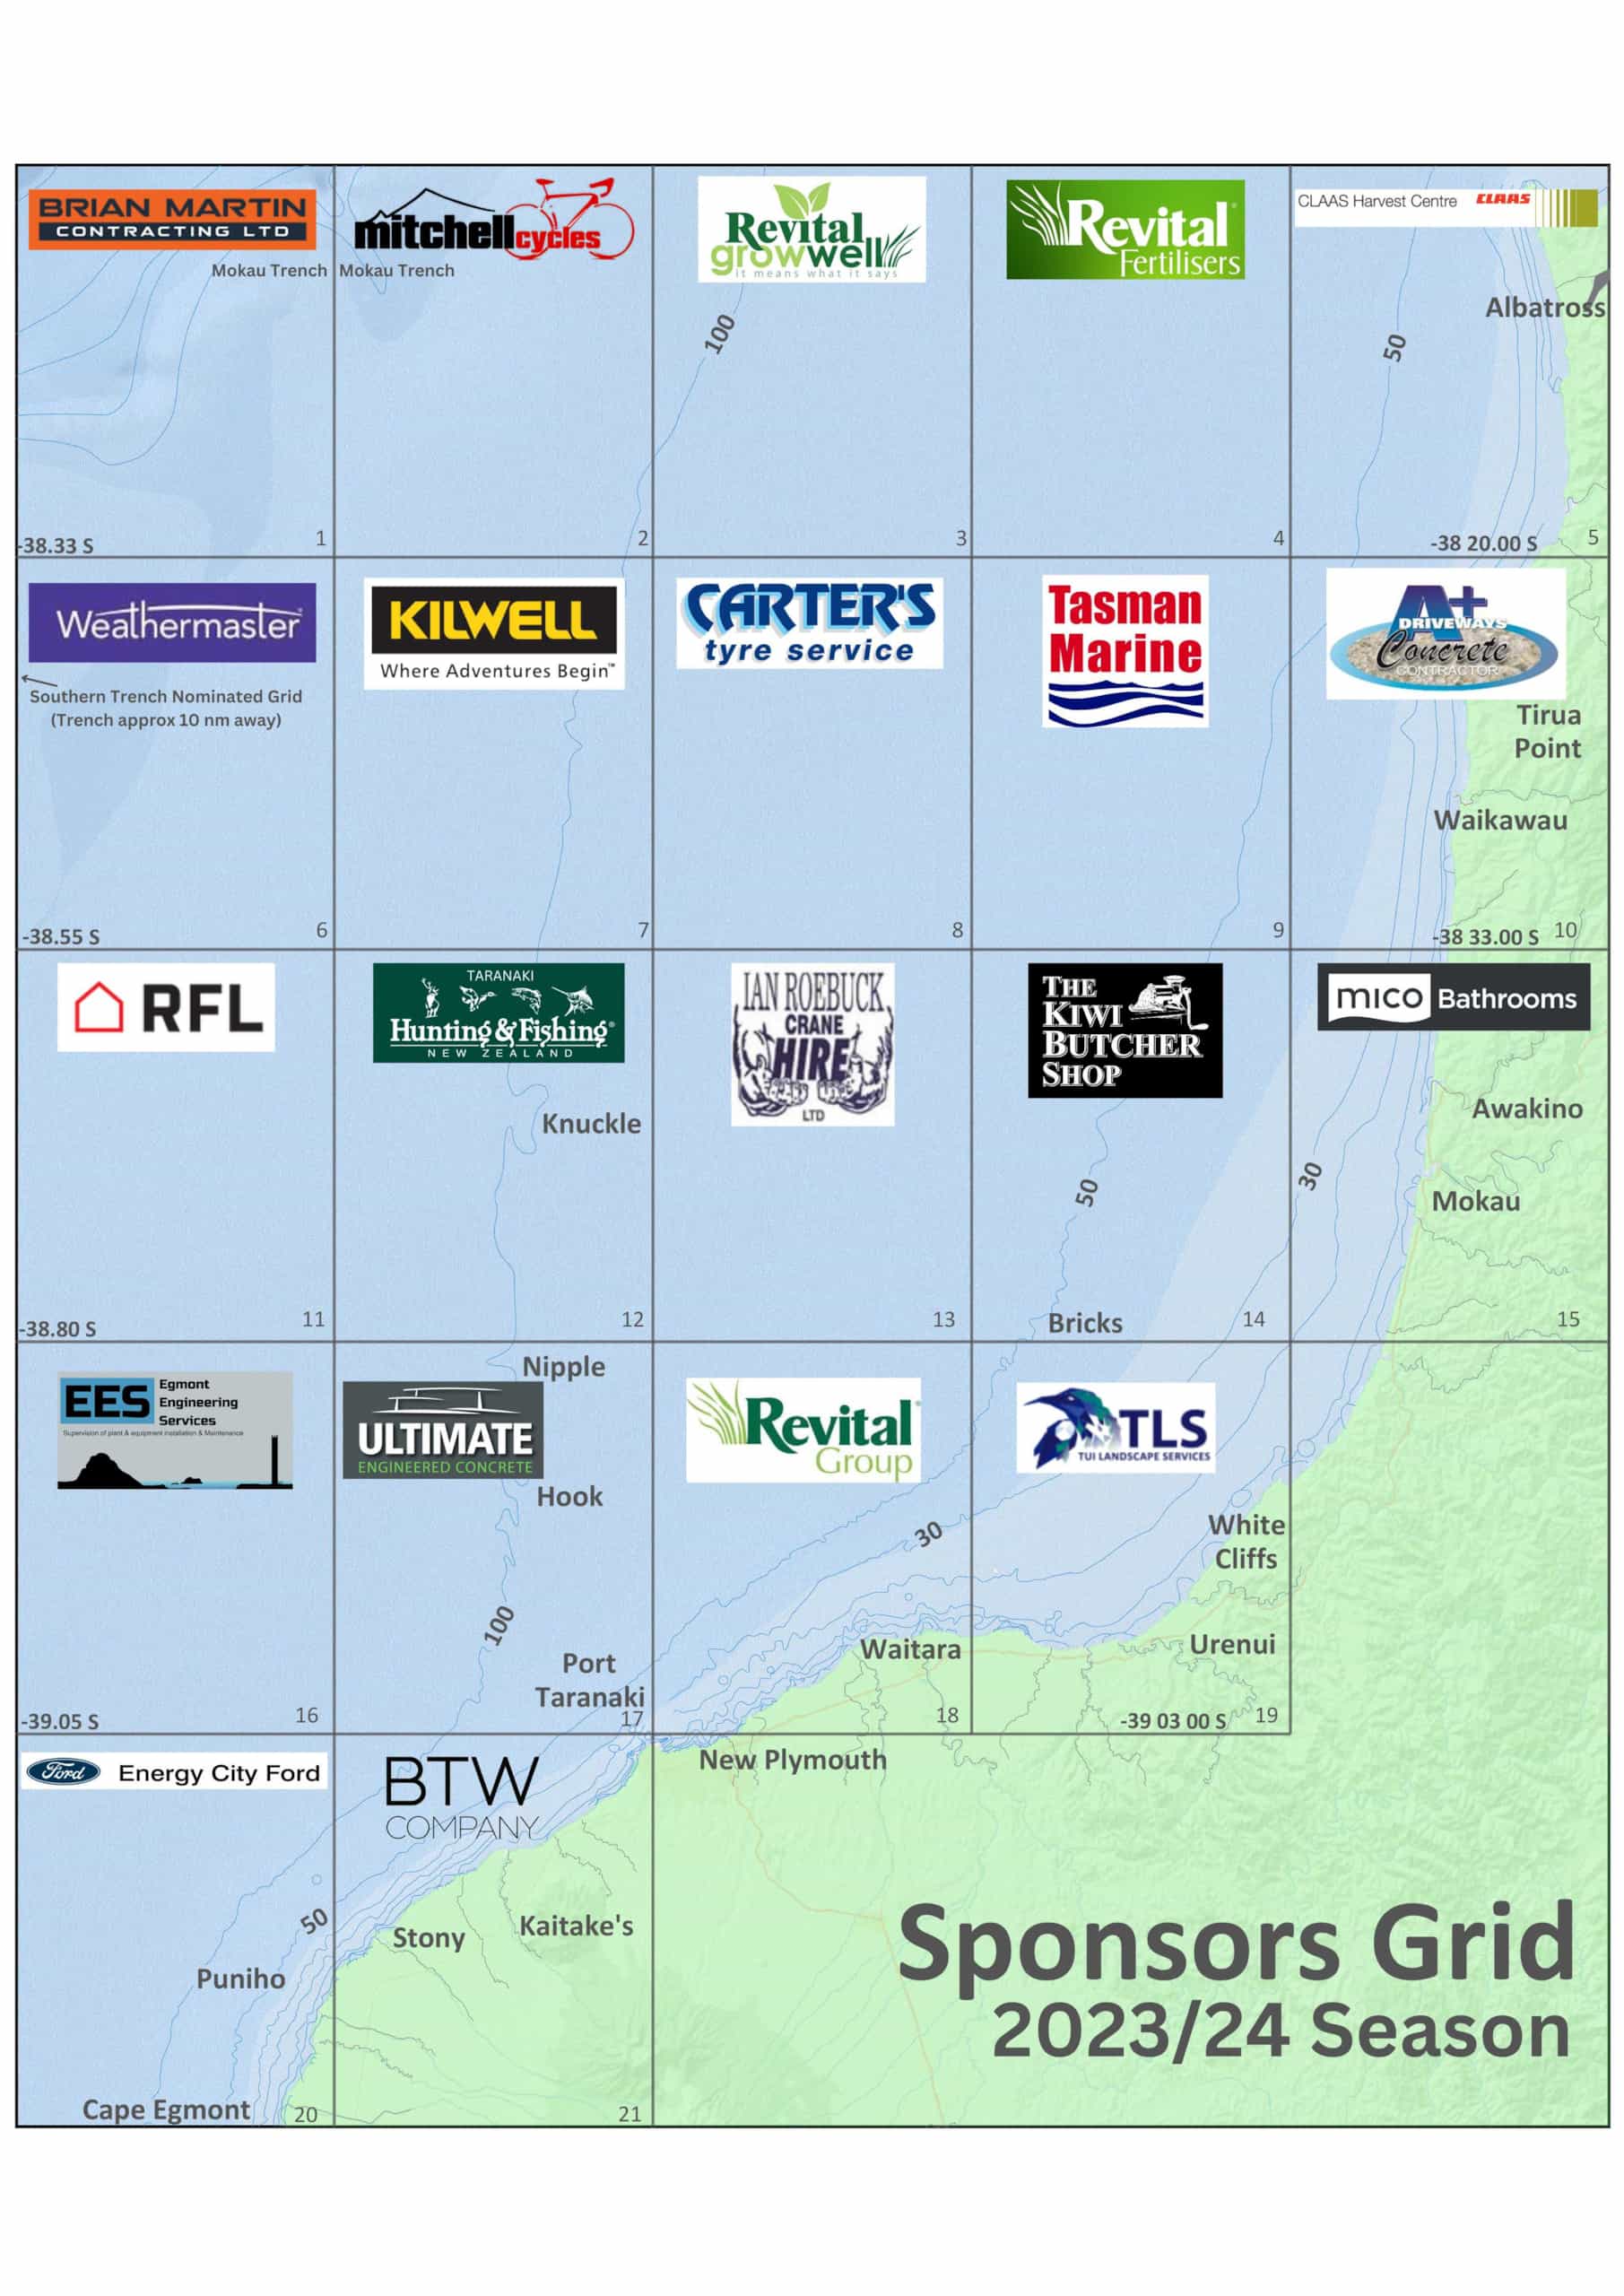 Sponsors Grid 2023 24 - 1